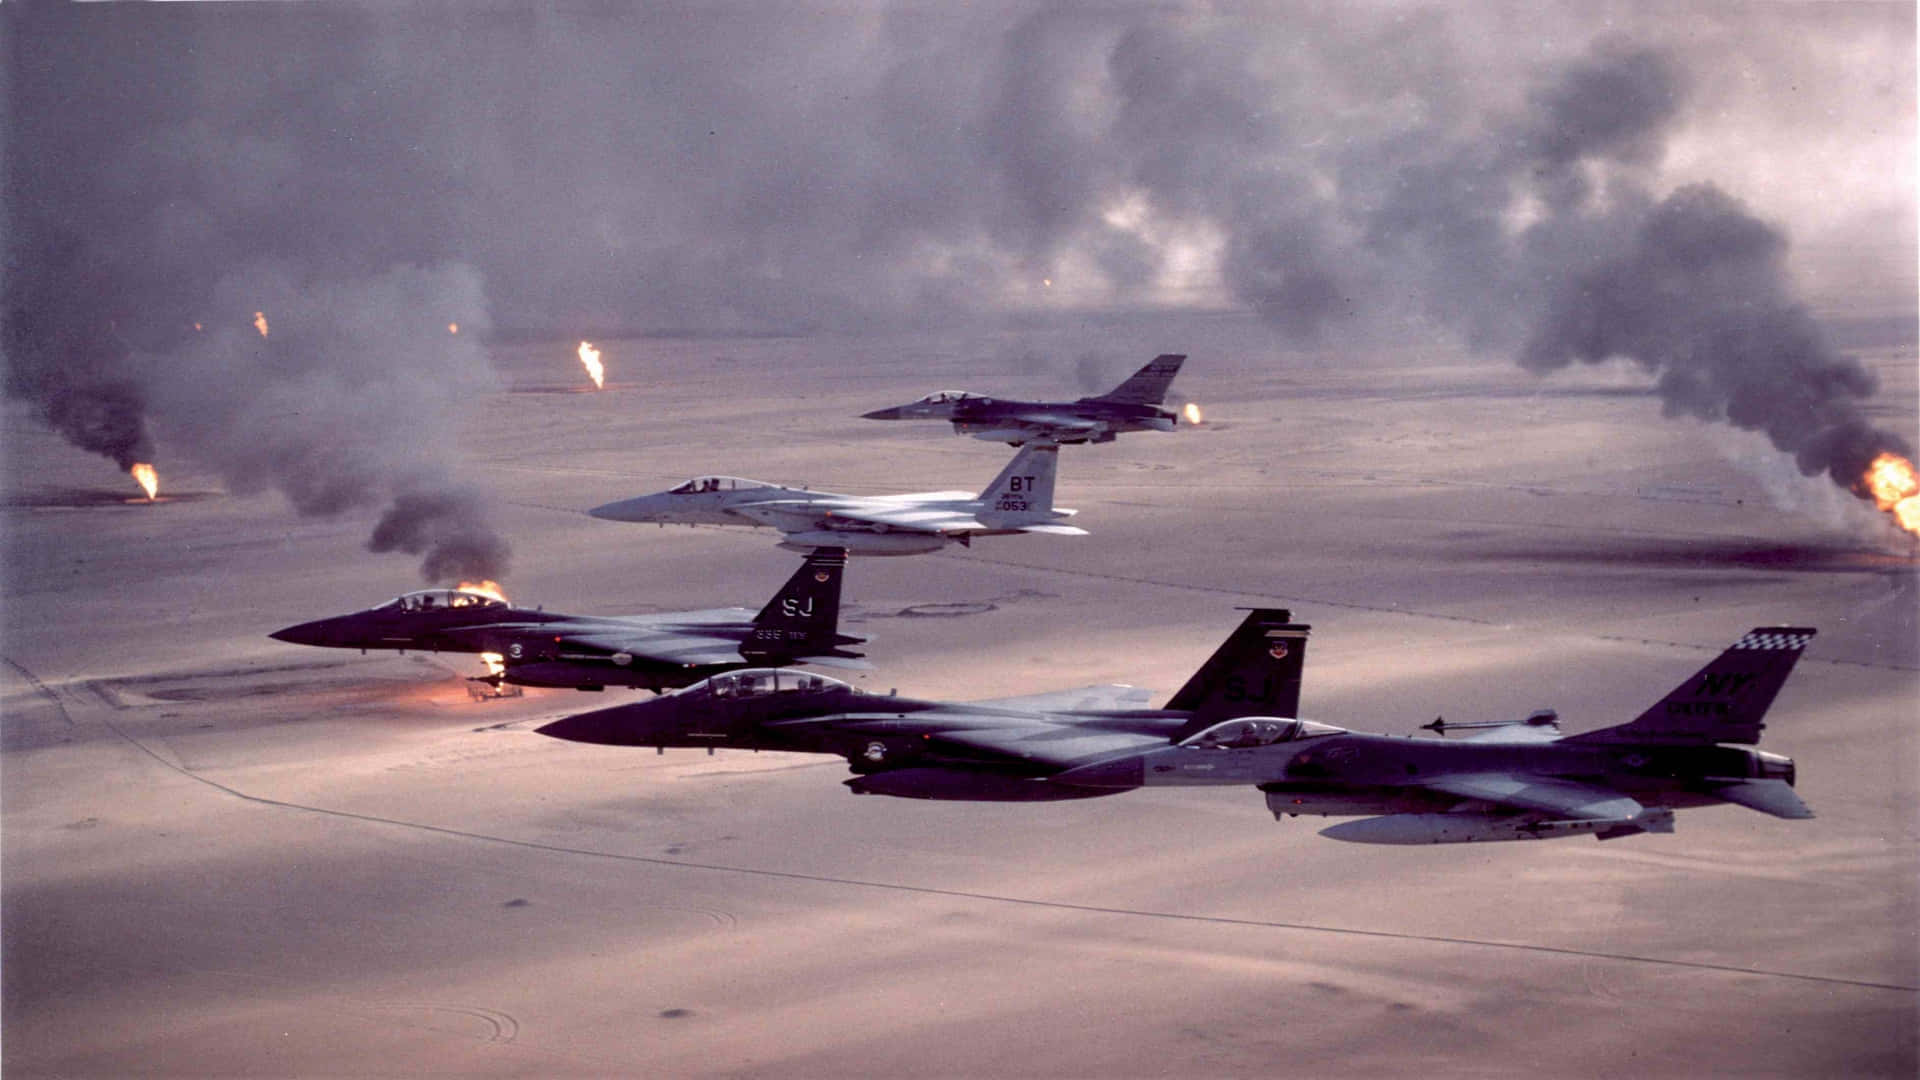 1080pjumbo Jets Gulf War Bakgrundsbild.